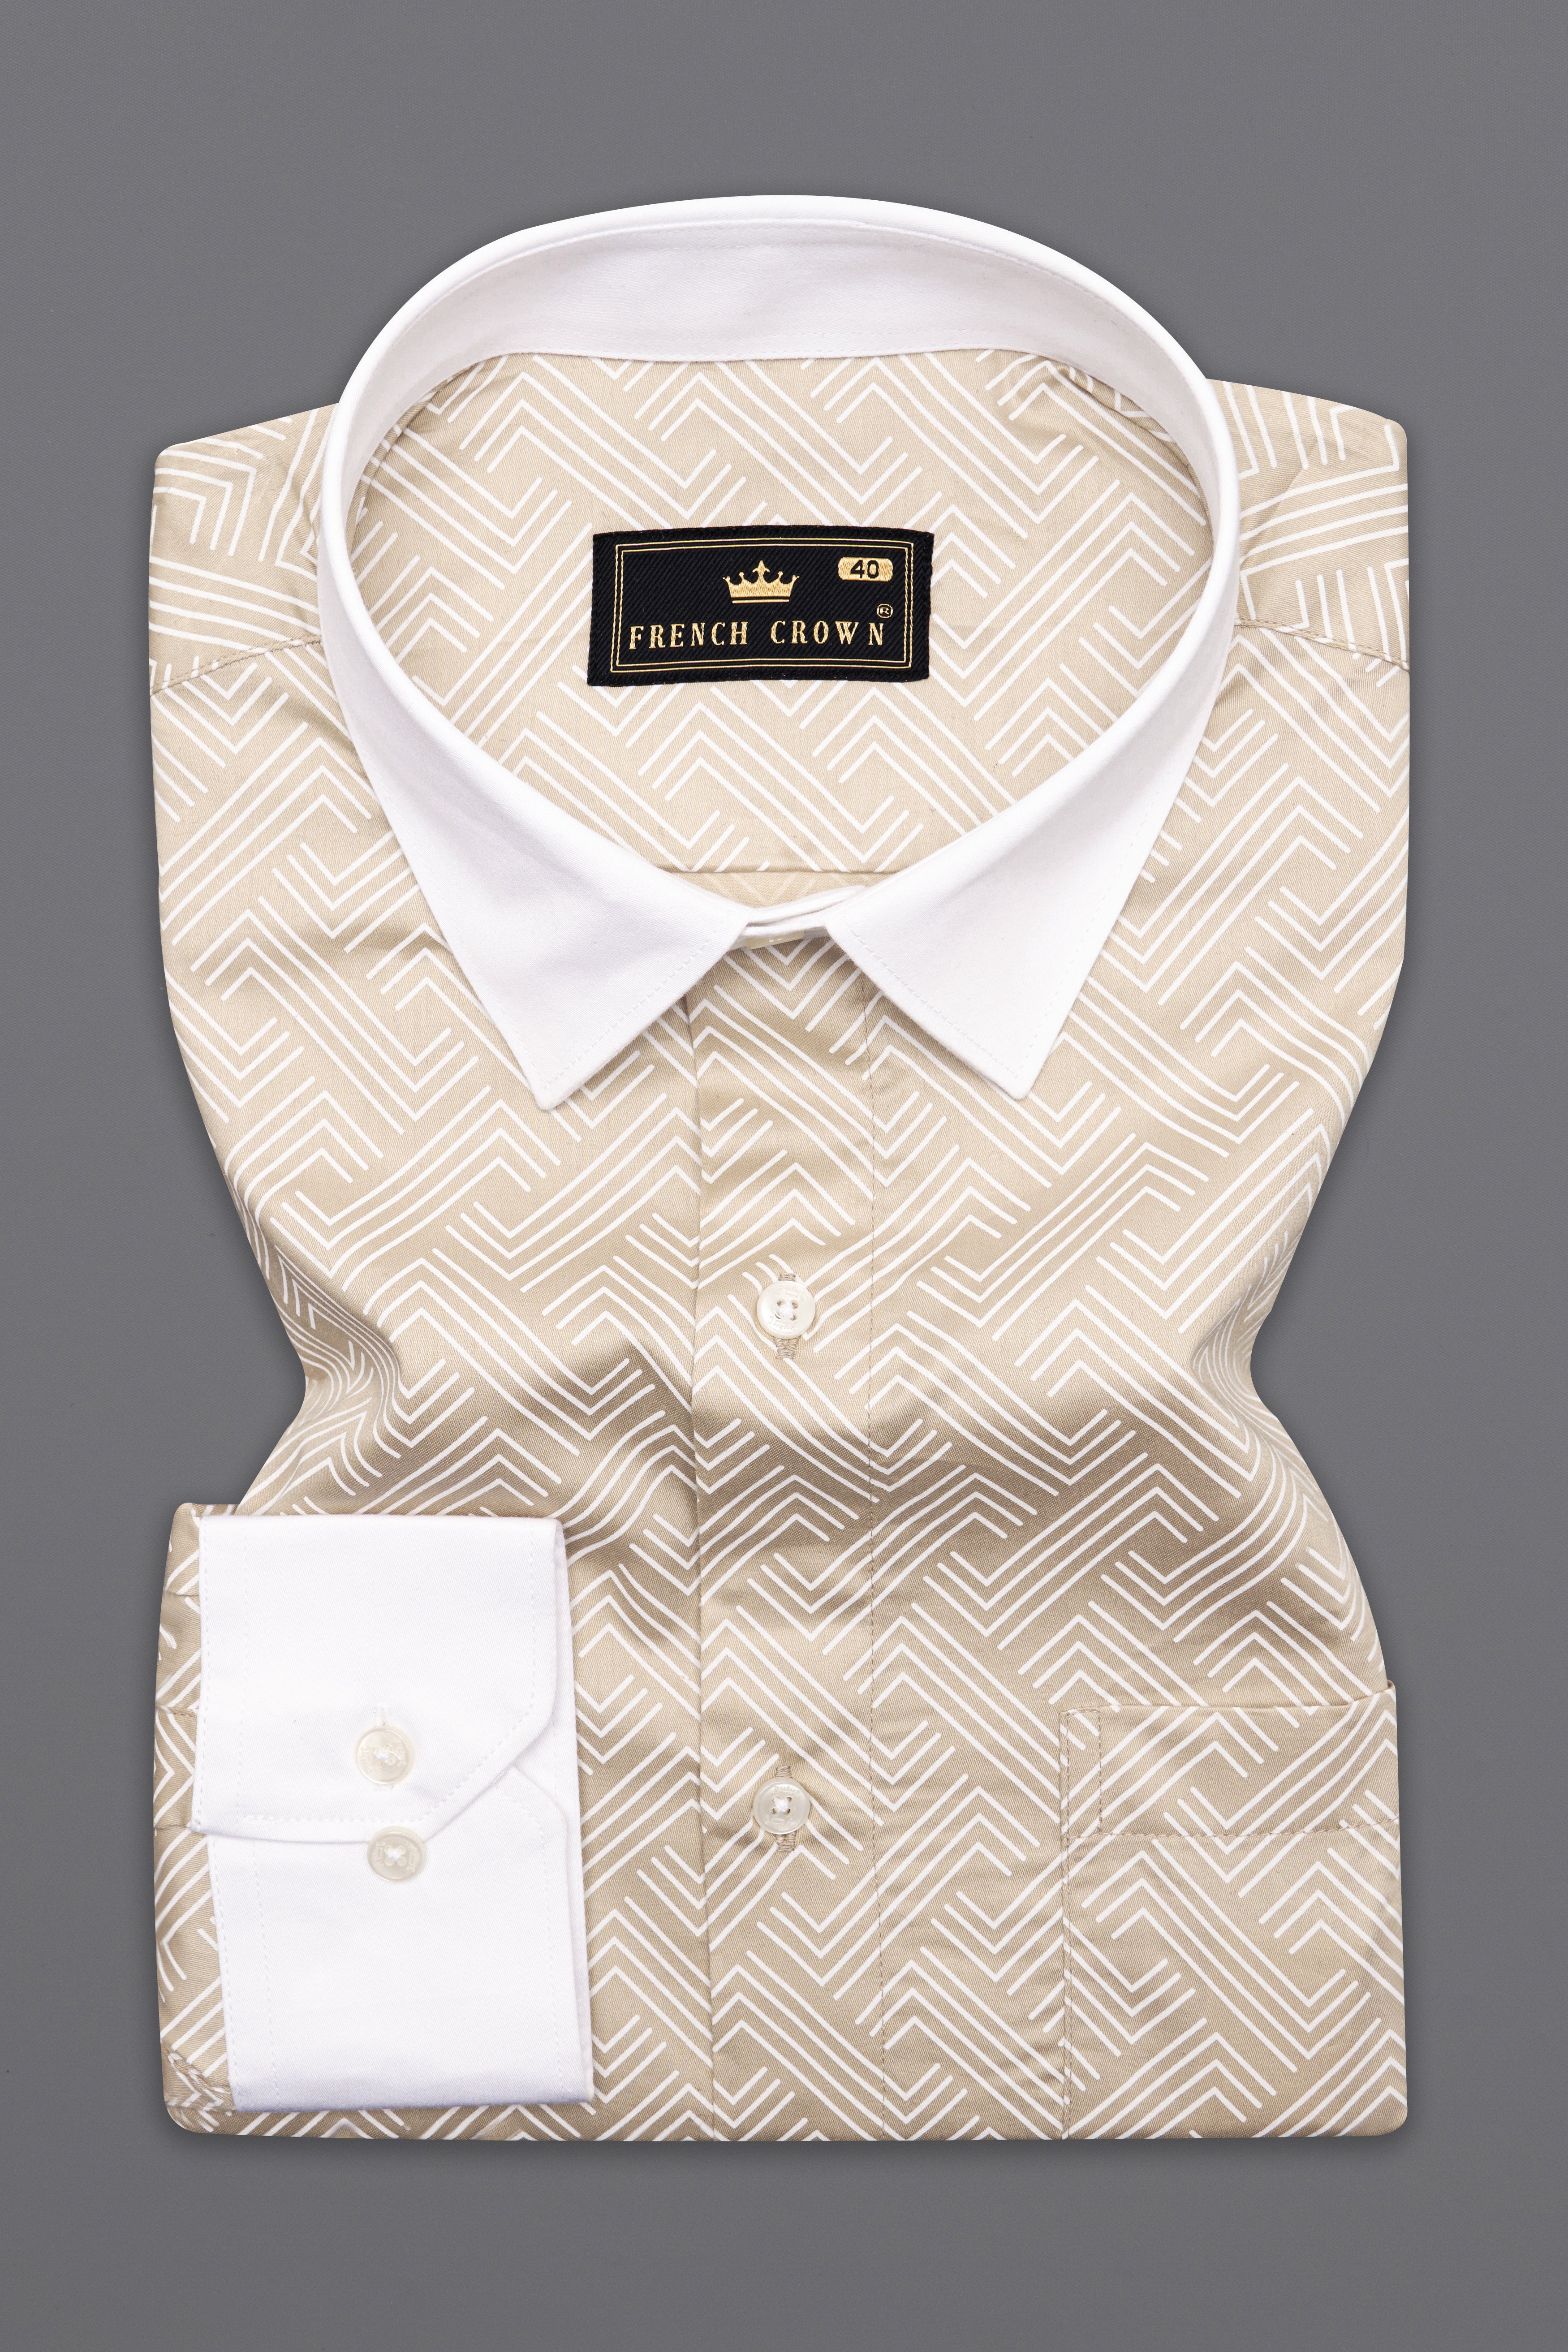 Hampton Brown with White Cuffs and Collar Super Soft Premium Cotton Shirt